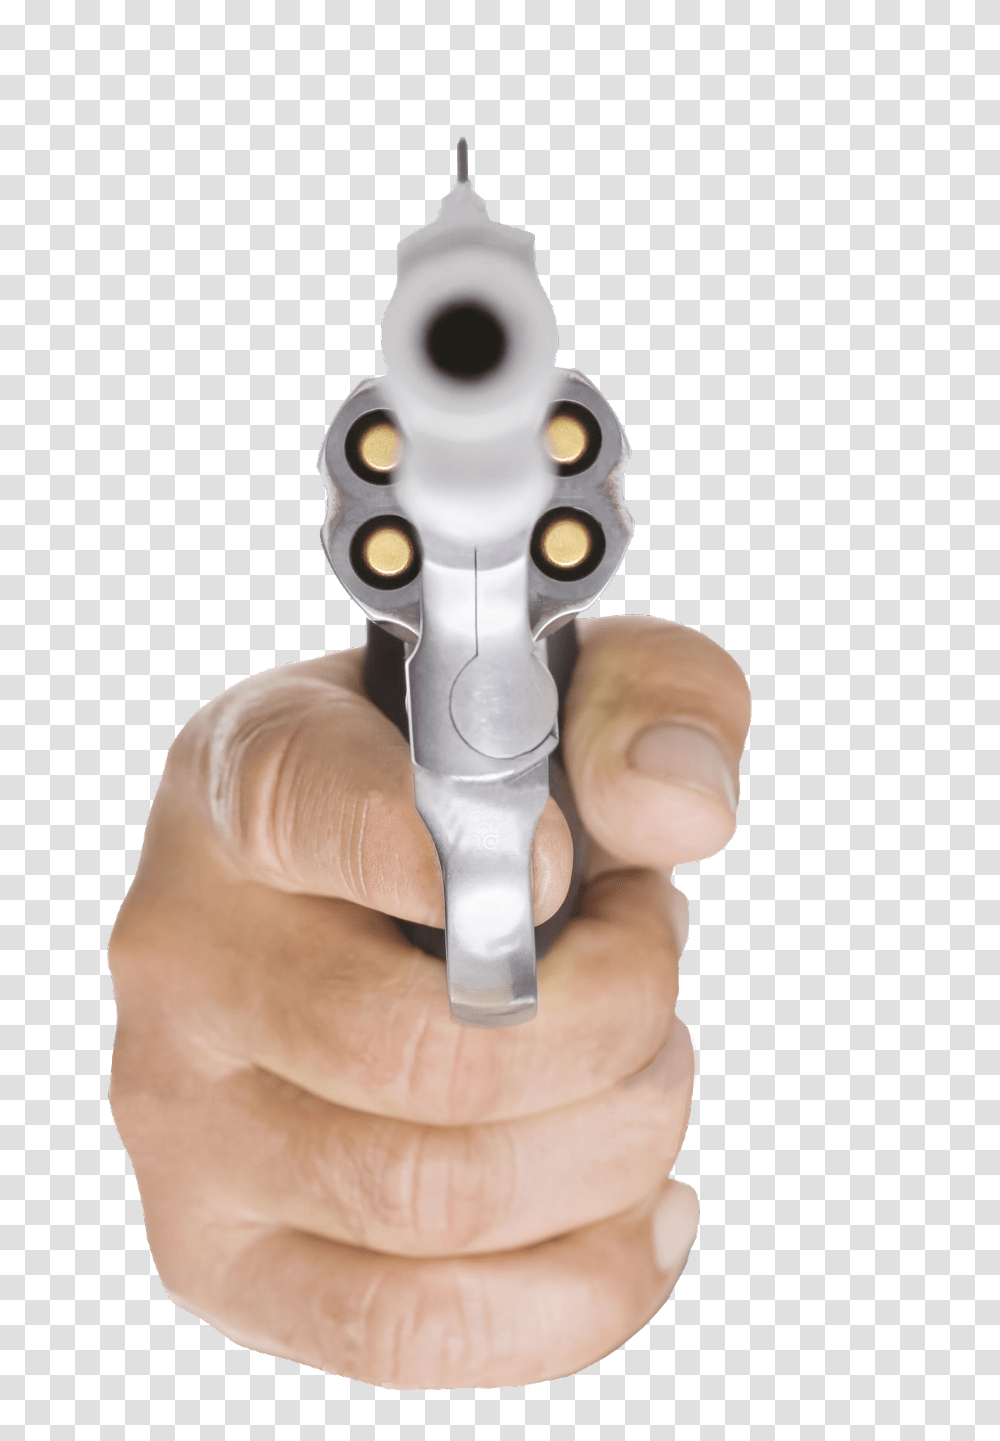 Pistol Gun Guns Bullet Weapon Face Cannon Revolver Hand With Gun, Person, Human, Finger, Slingshot Transparent Png